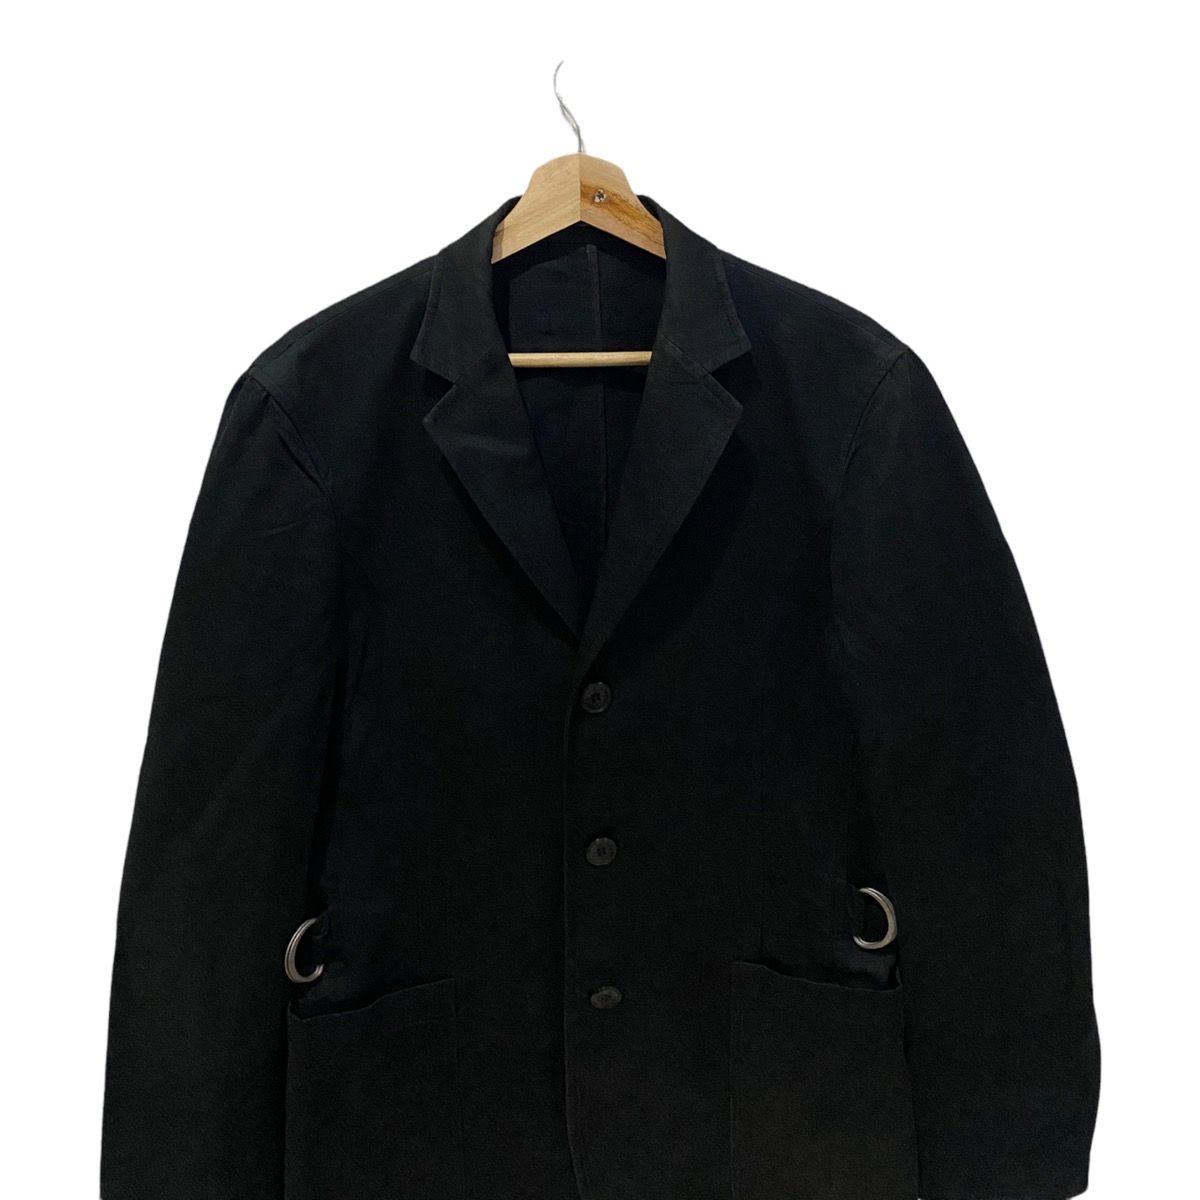 Archival Clothing - GRAIL🔥GAULTIER HOMME OBJET BONDAGE COAT - 5